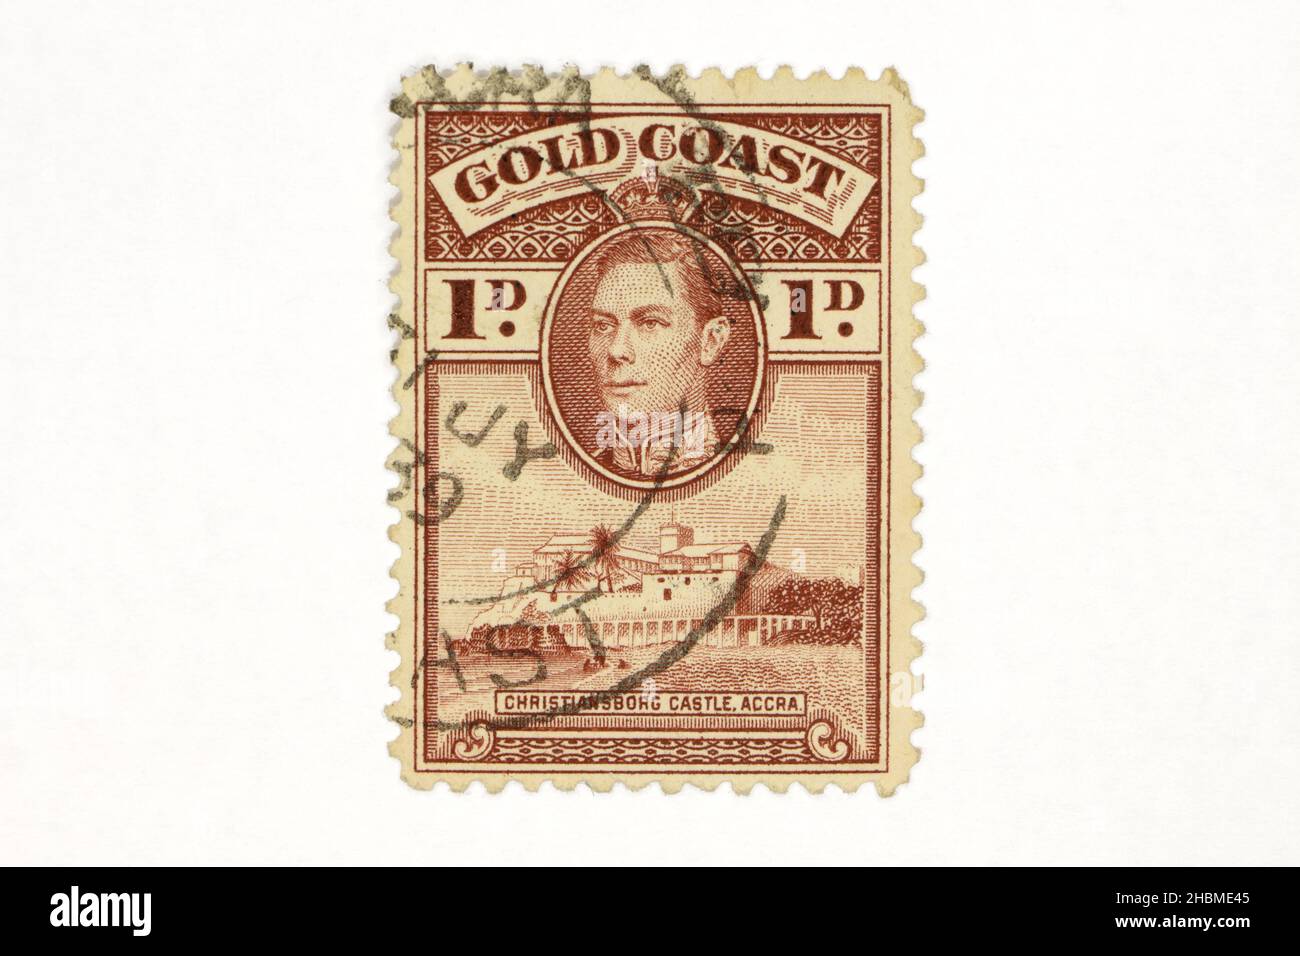 King George Vl postage stamp of Gold Coast (Ghana). British empire Stock Photo